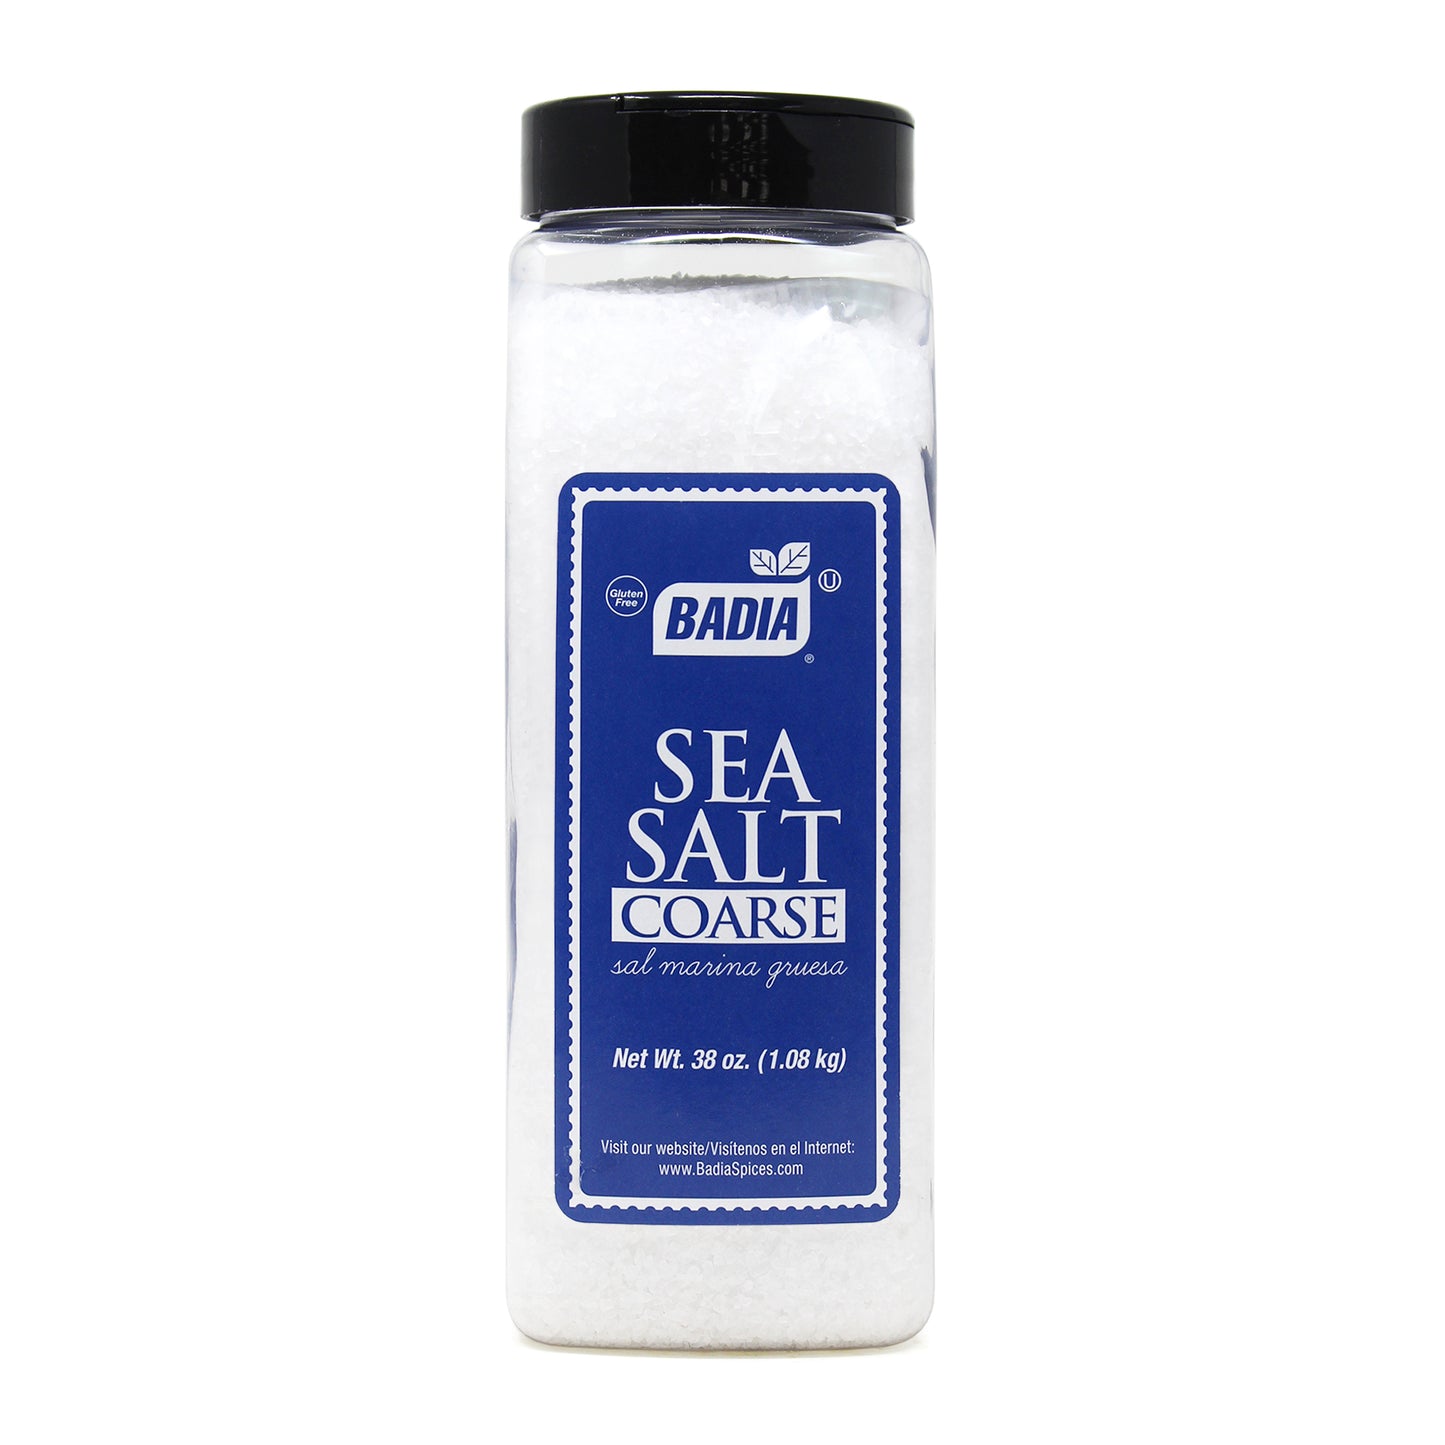 Badia Sea Salt Course 38oz 00840